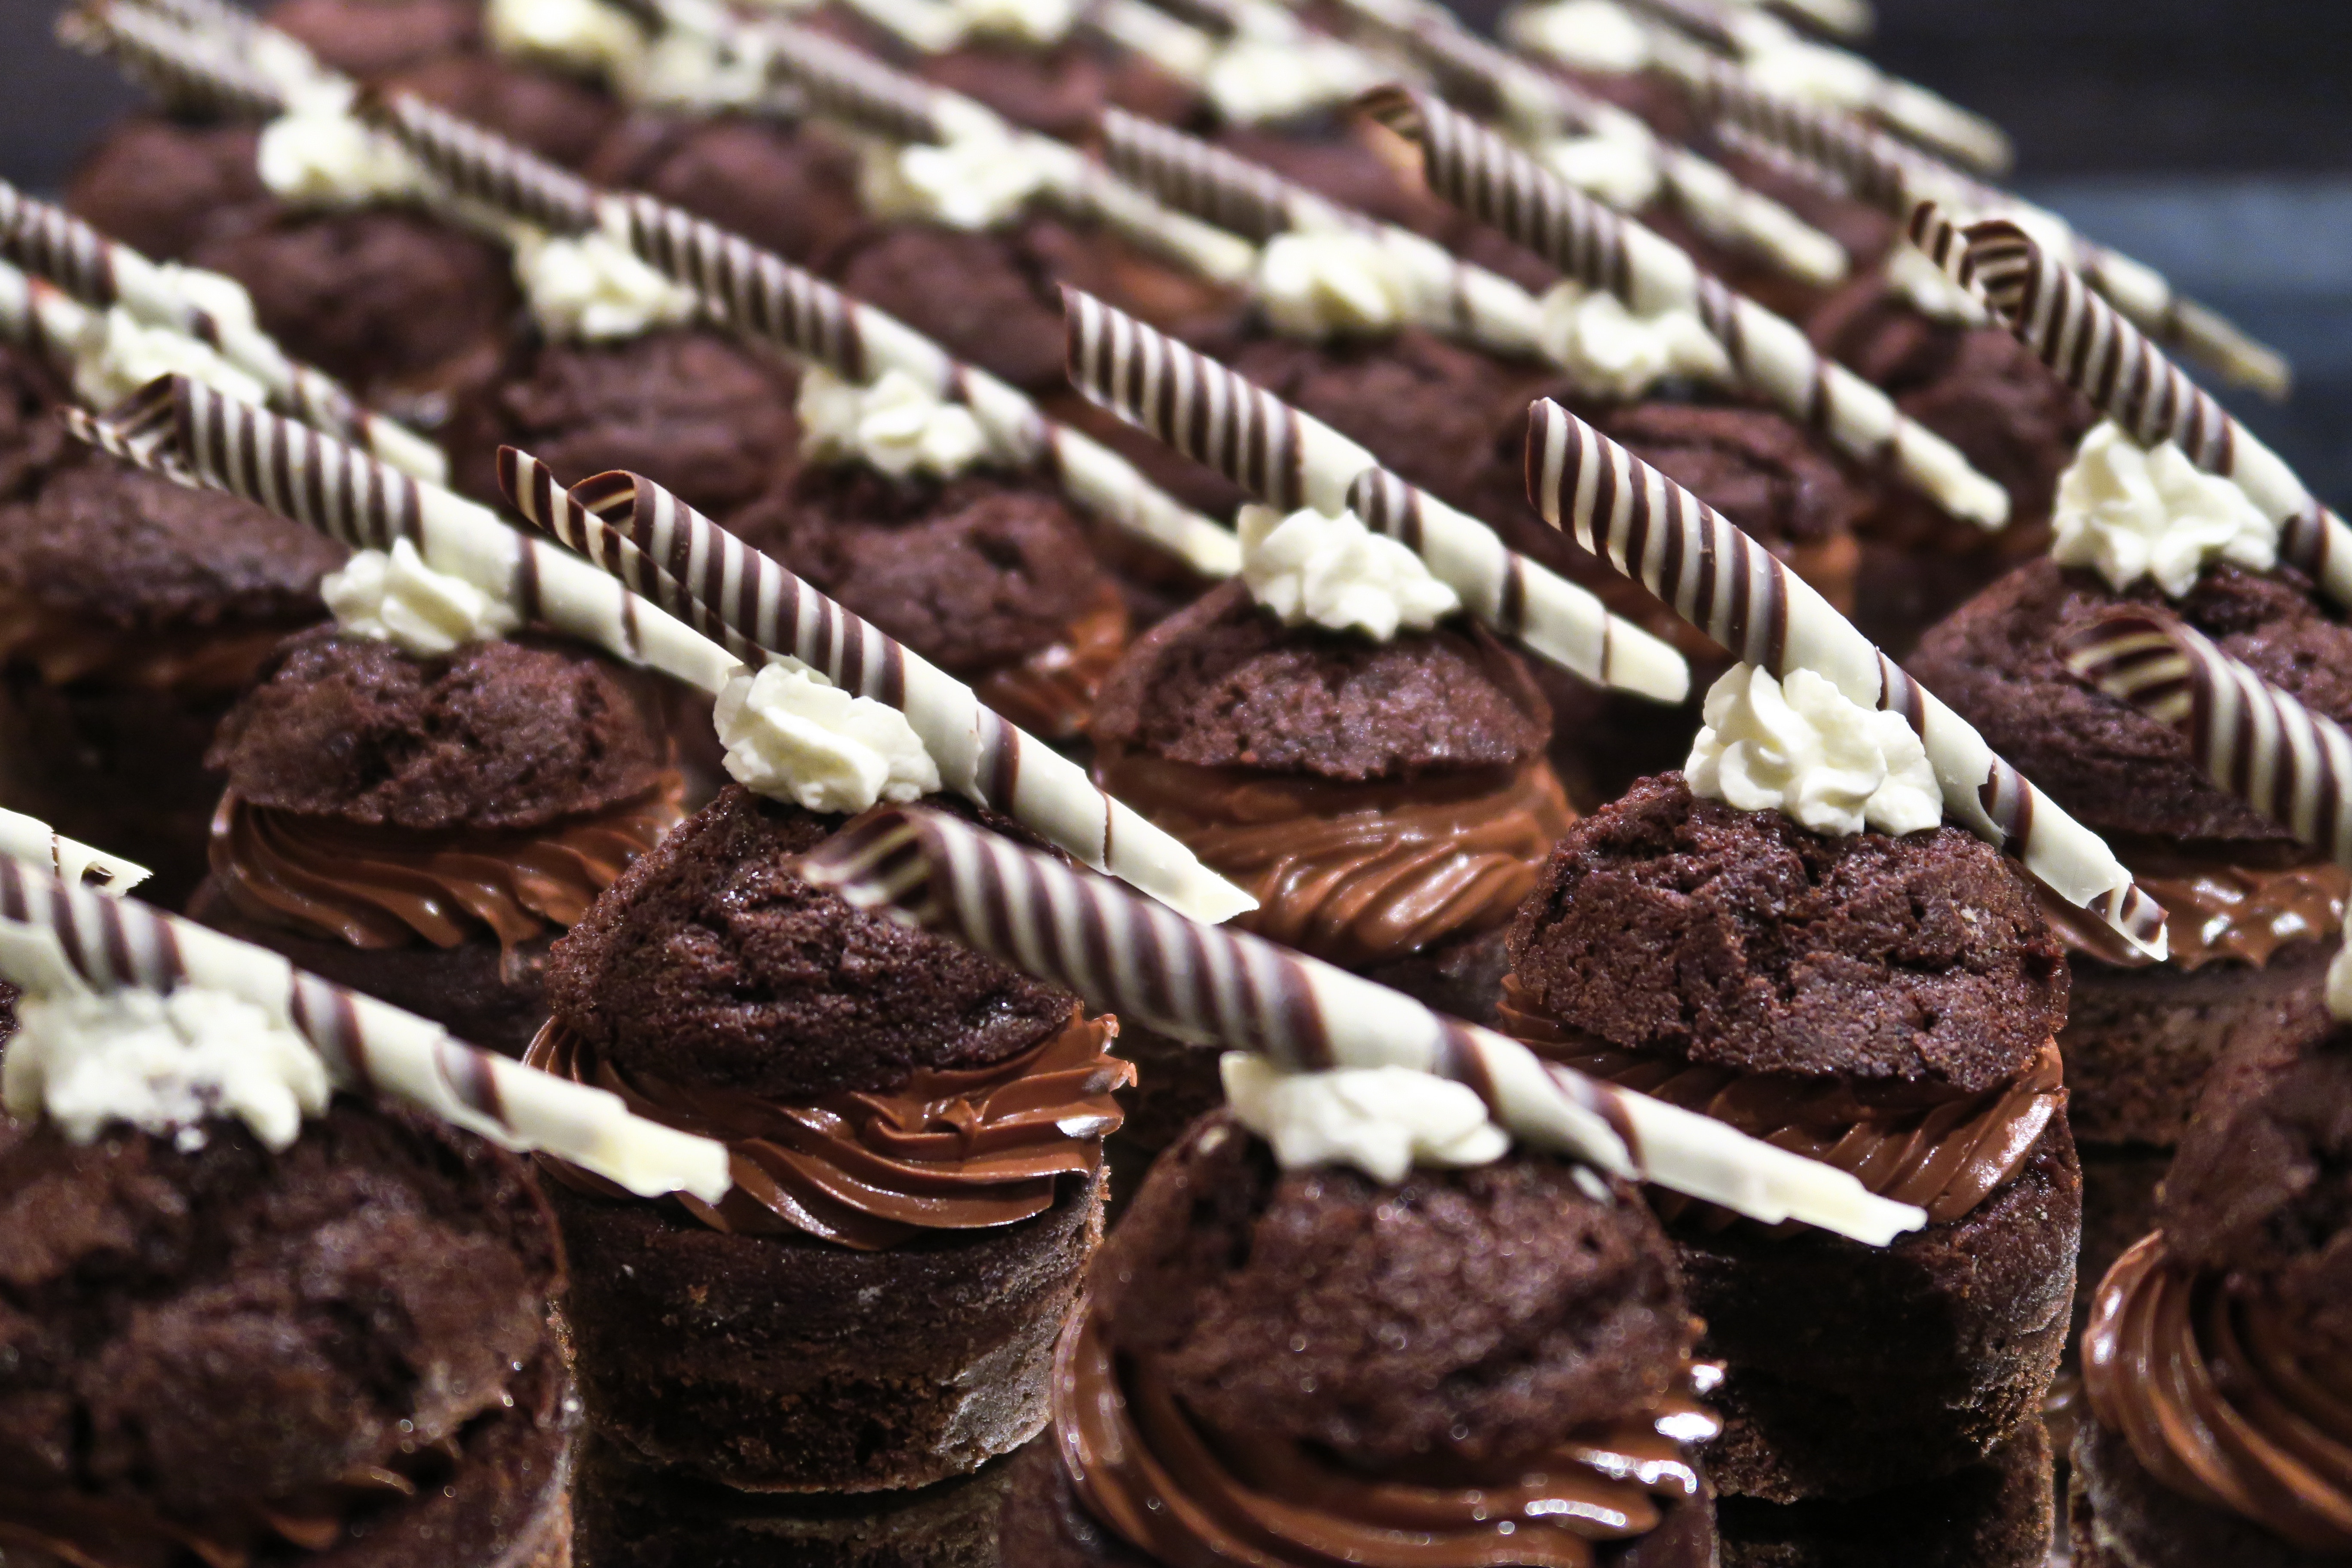 desktop Images cake, food, desert, bakery products, baking, cupcakes